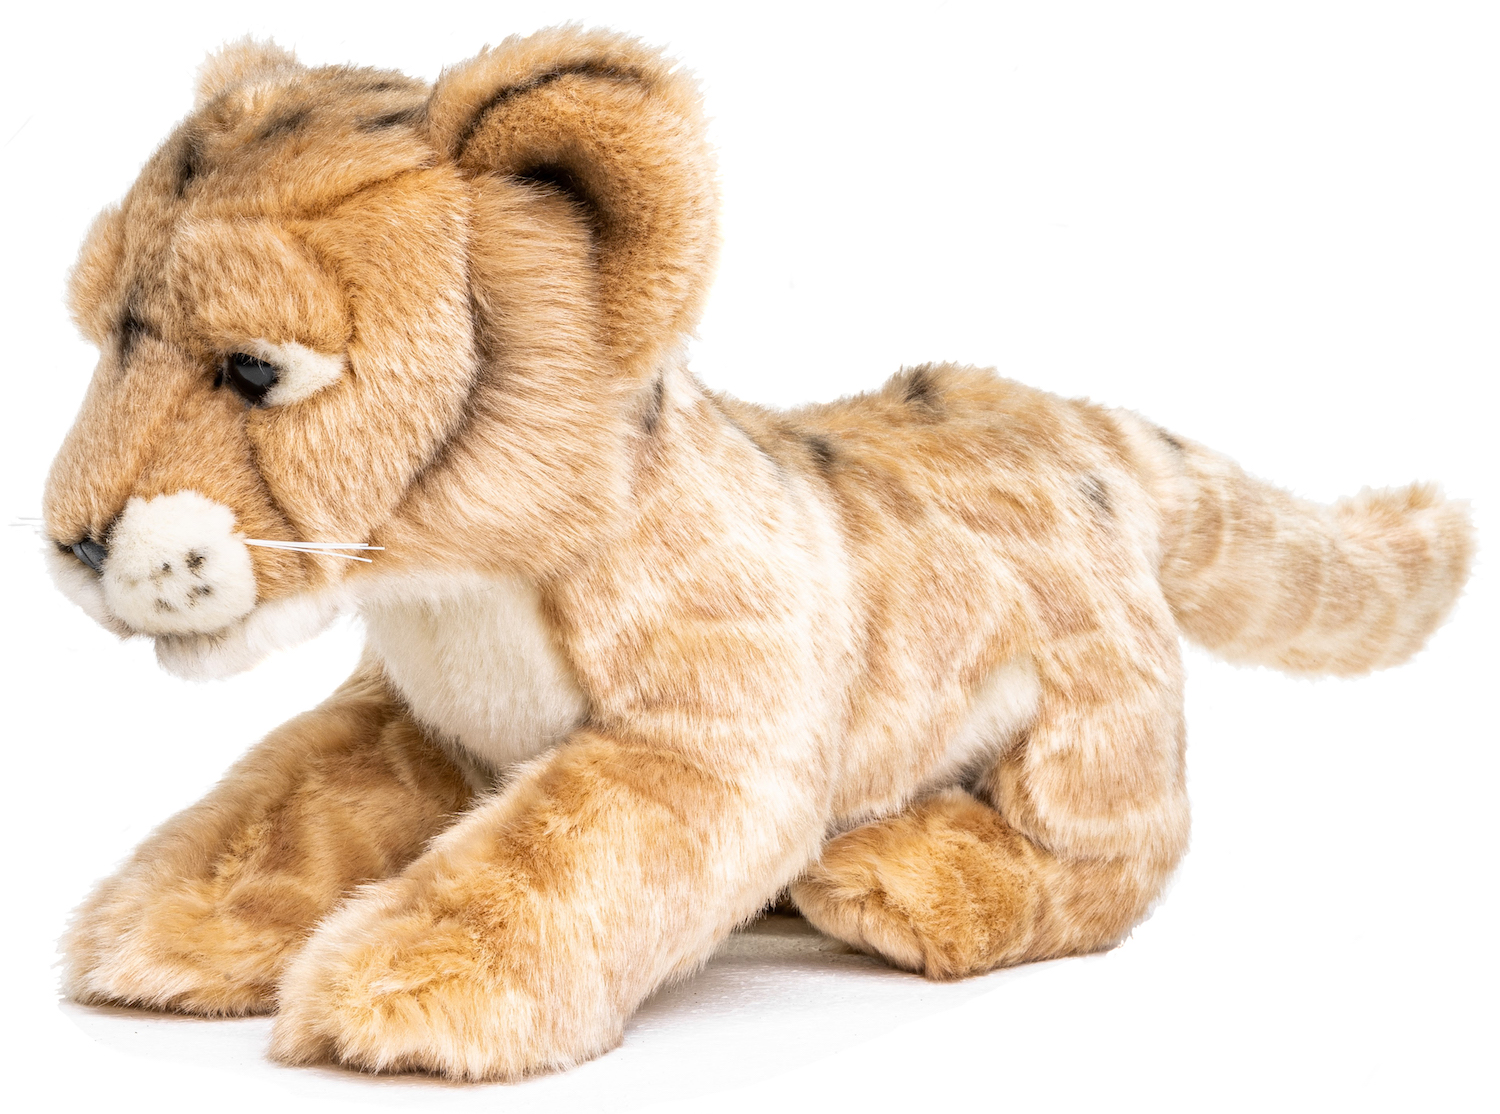  lion baby - 22 cm (length) 